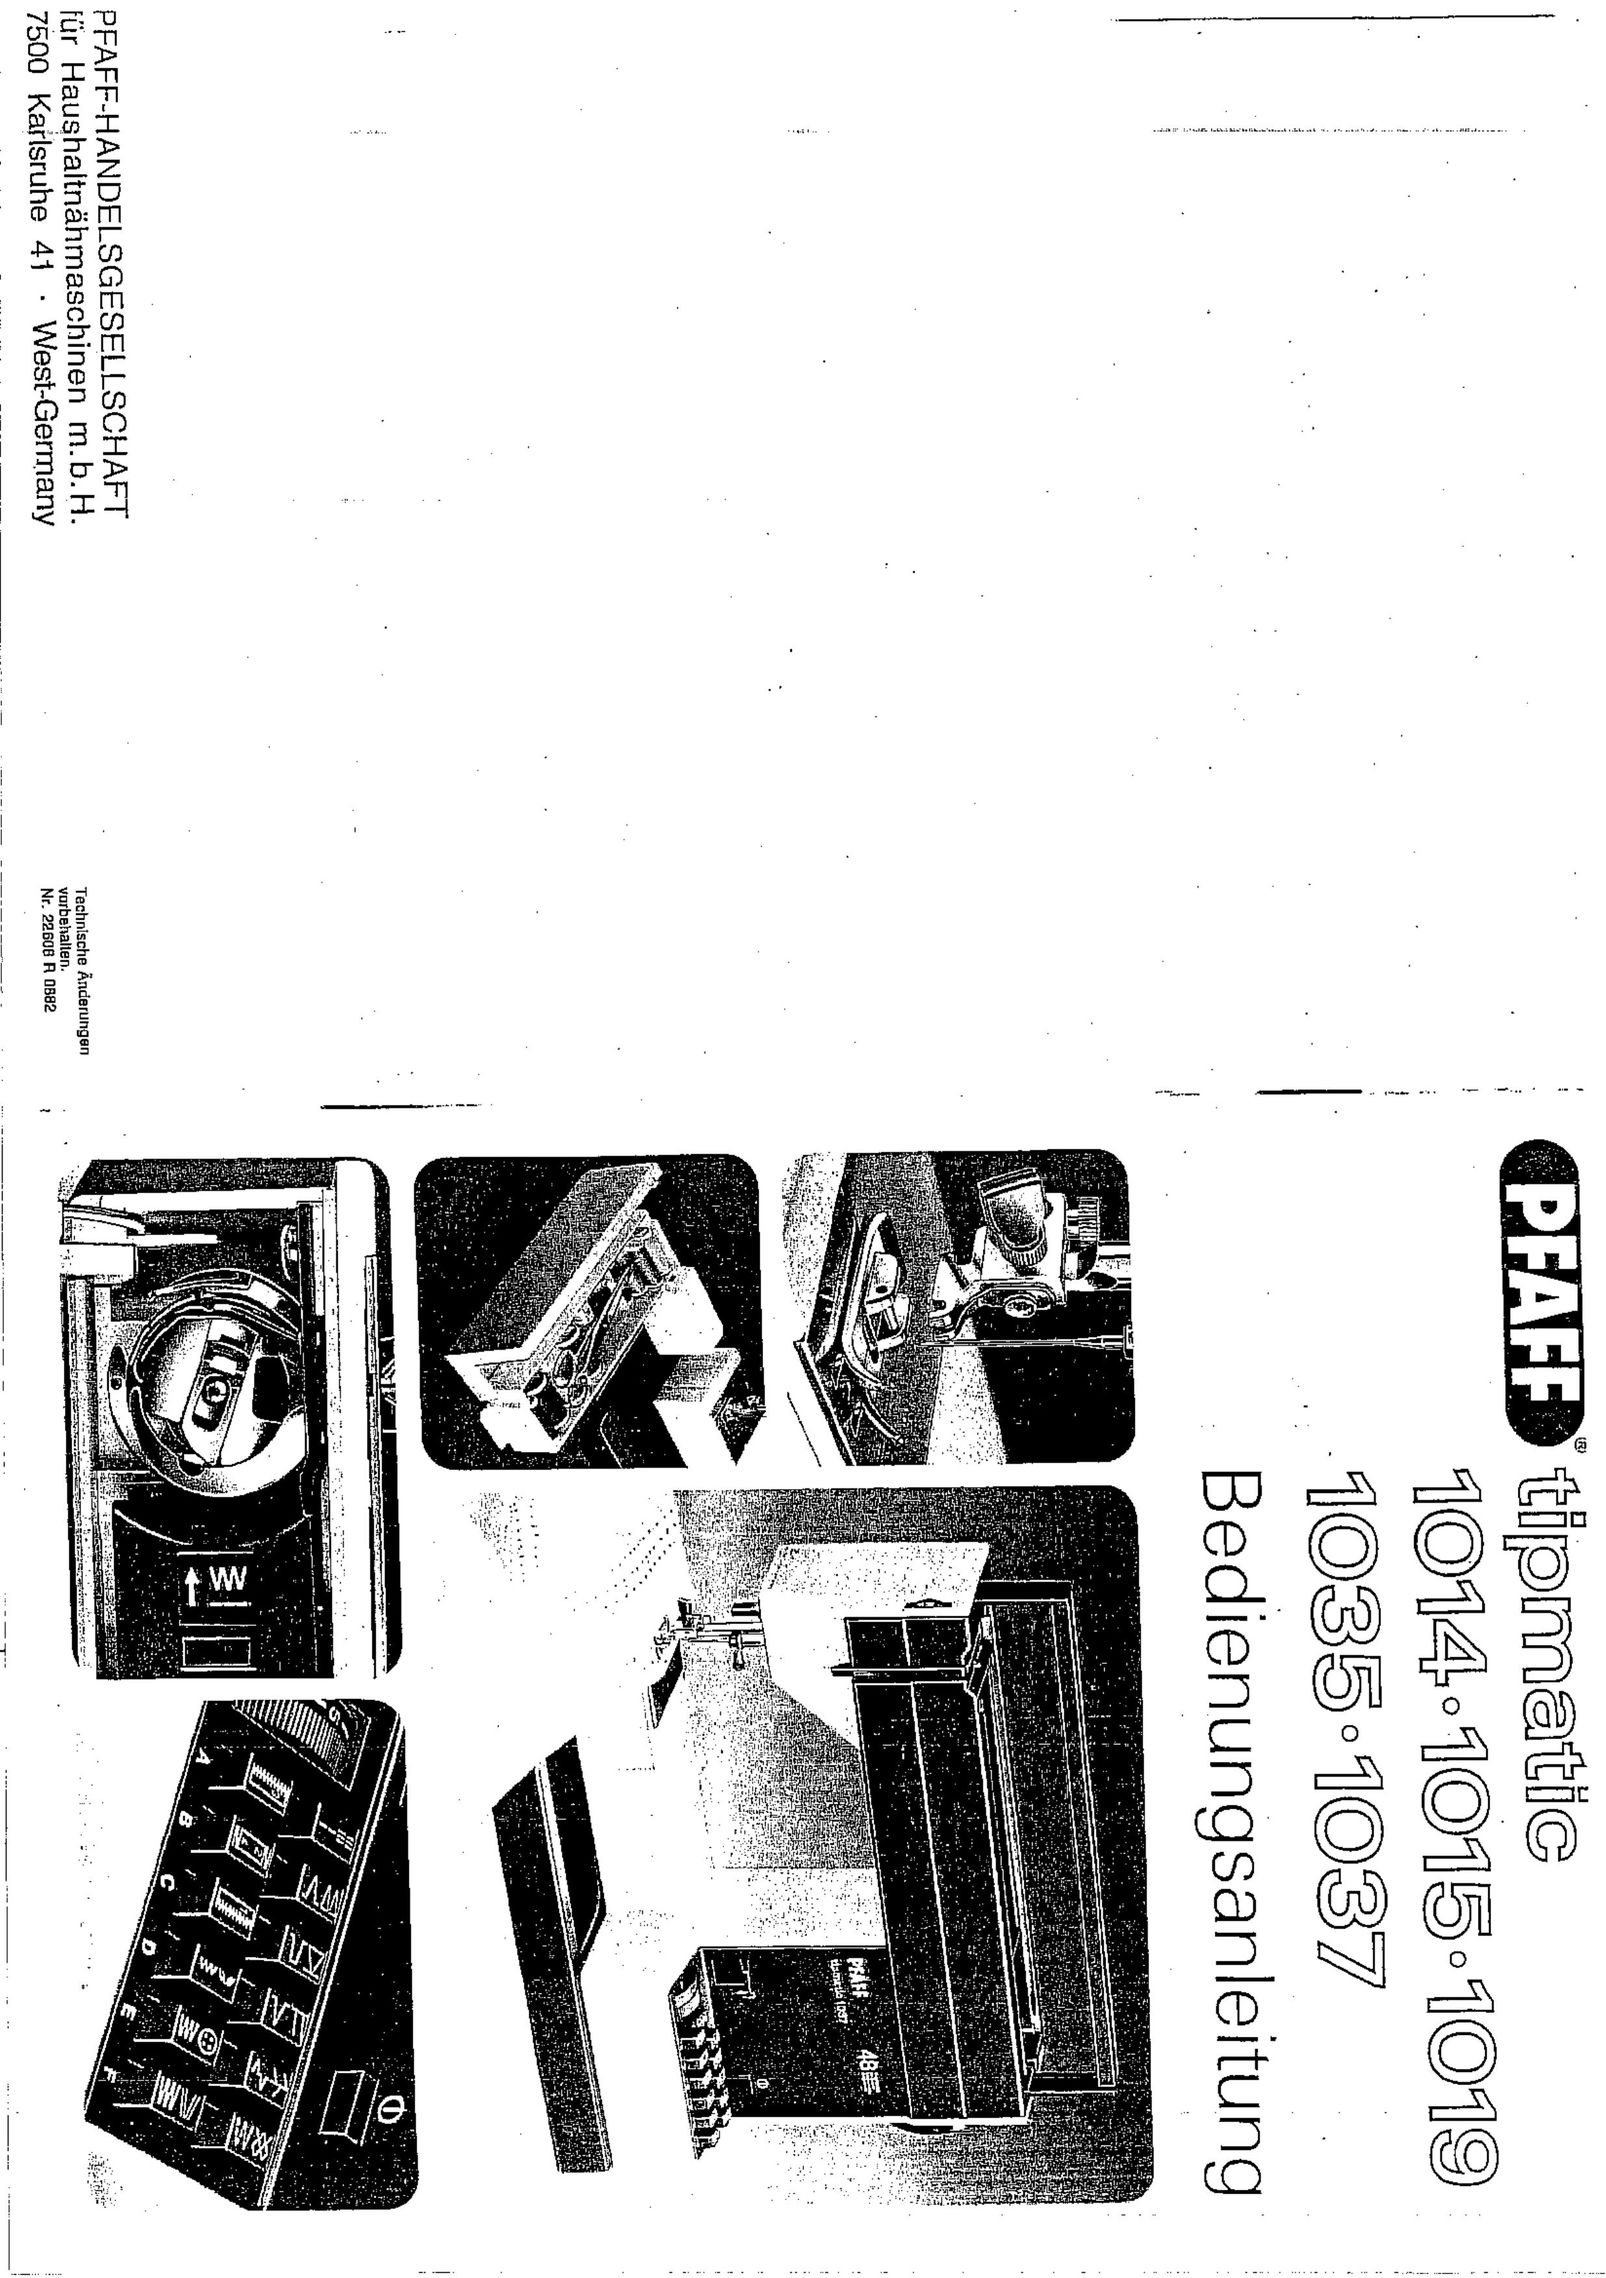 Pfaff 1035 Sewing Machine User Manual